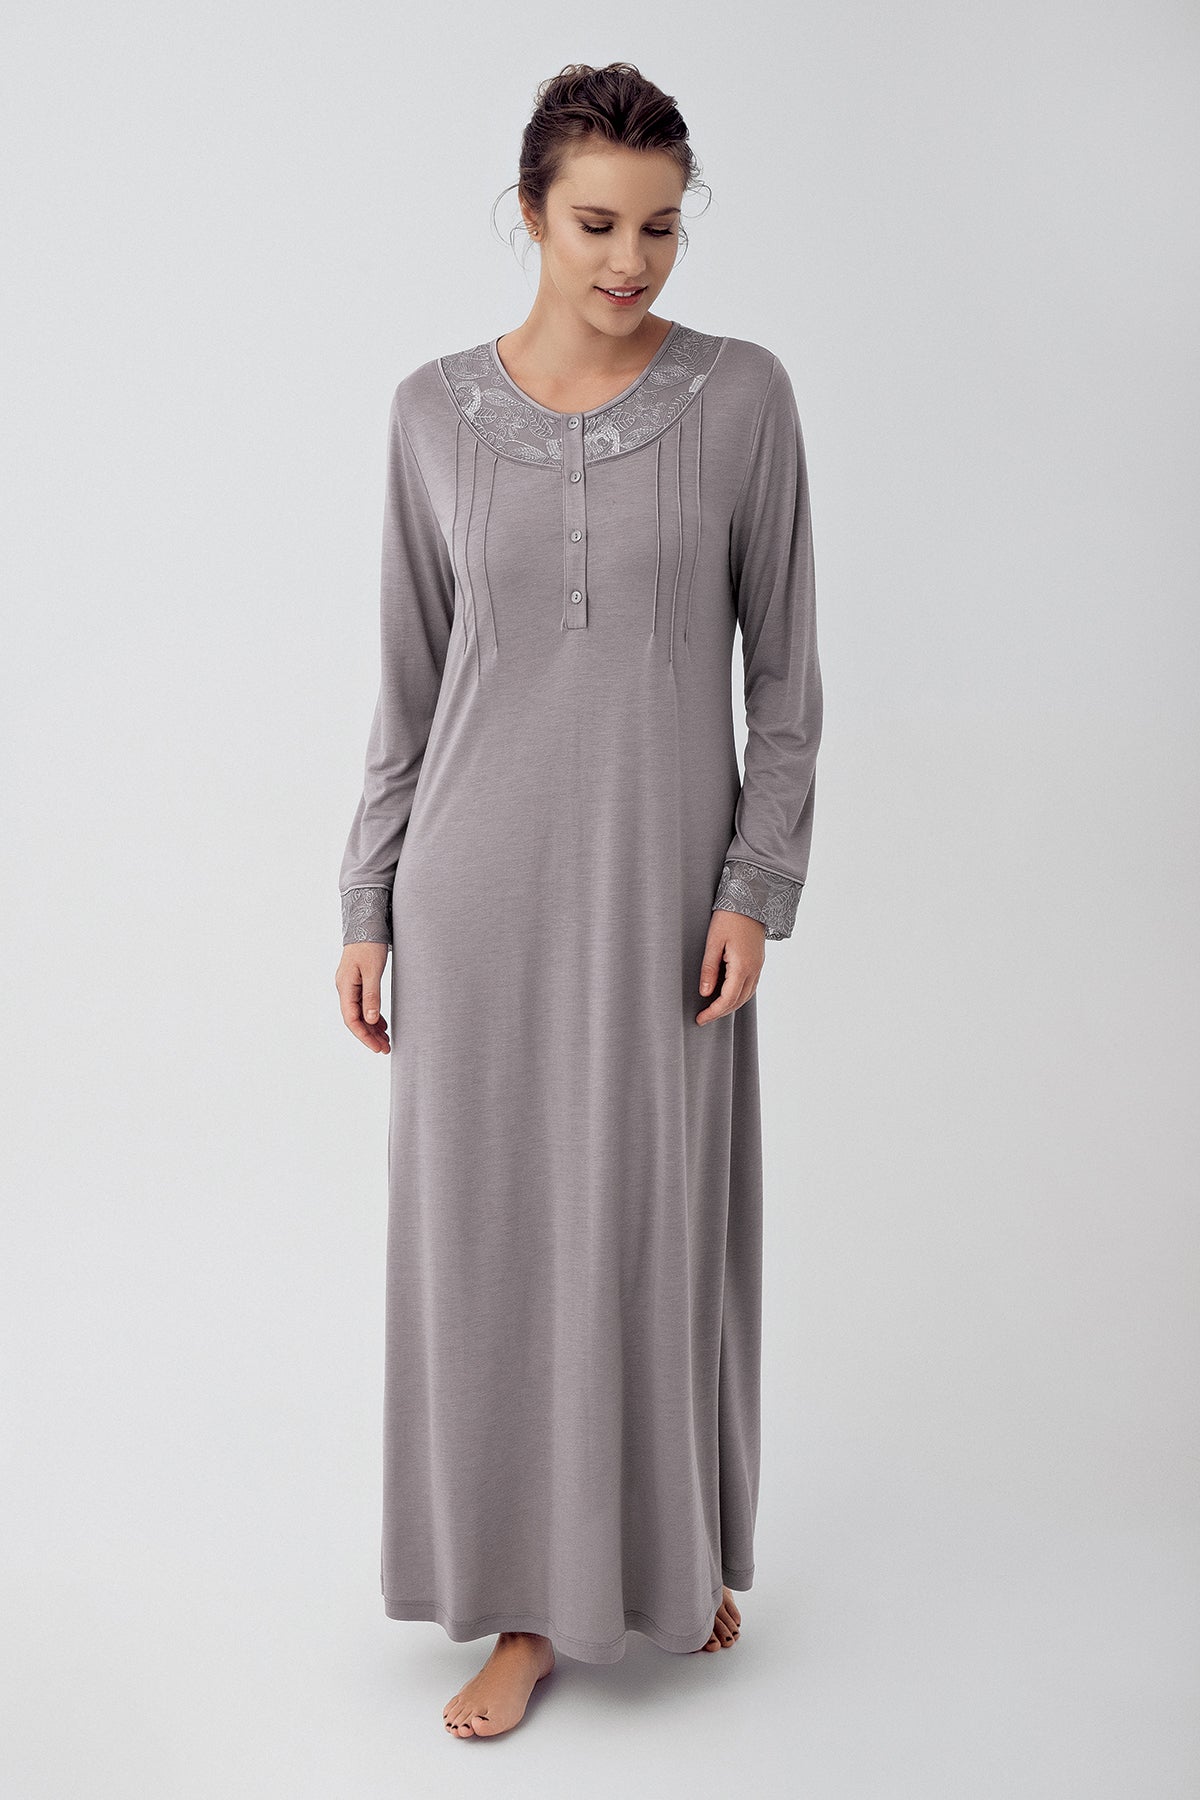 Lace Sleeve Long Maternity & Nursing Nightgown Grey - 16104